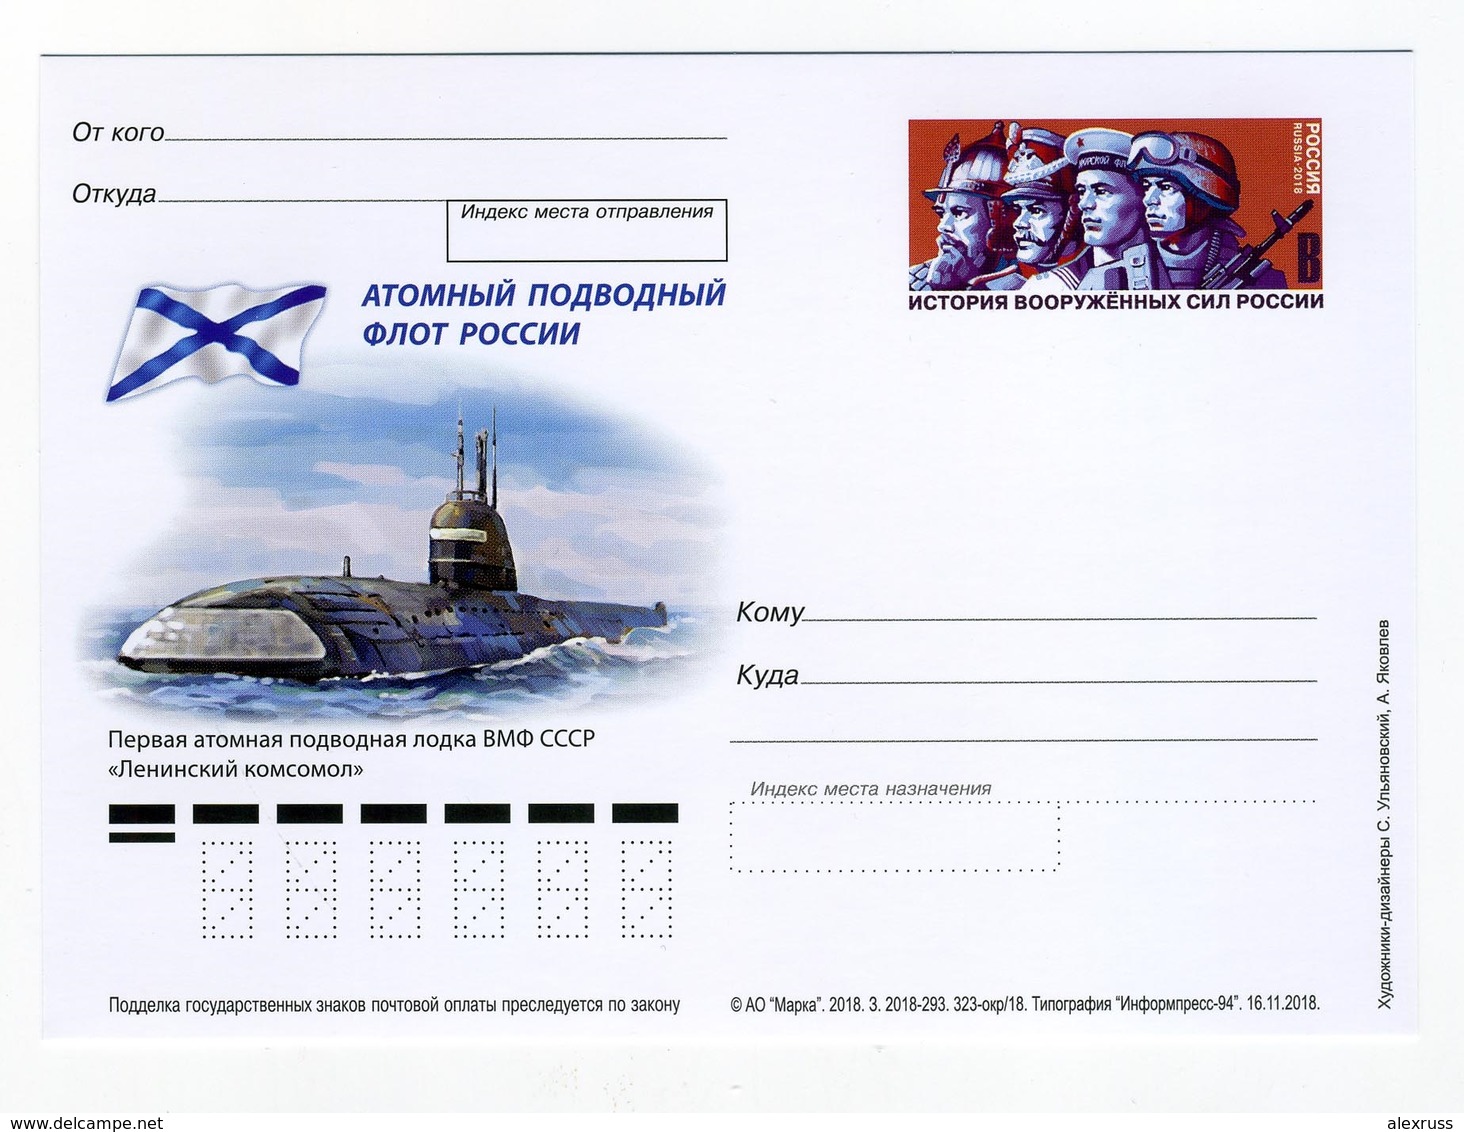 Russia 2018 Post Card, First Nuclear Submarine "Leninsky Komsomol" In The Fleet Of Soviet Union, # 323/окр,VF NEW !! - Submarines